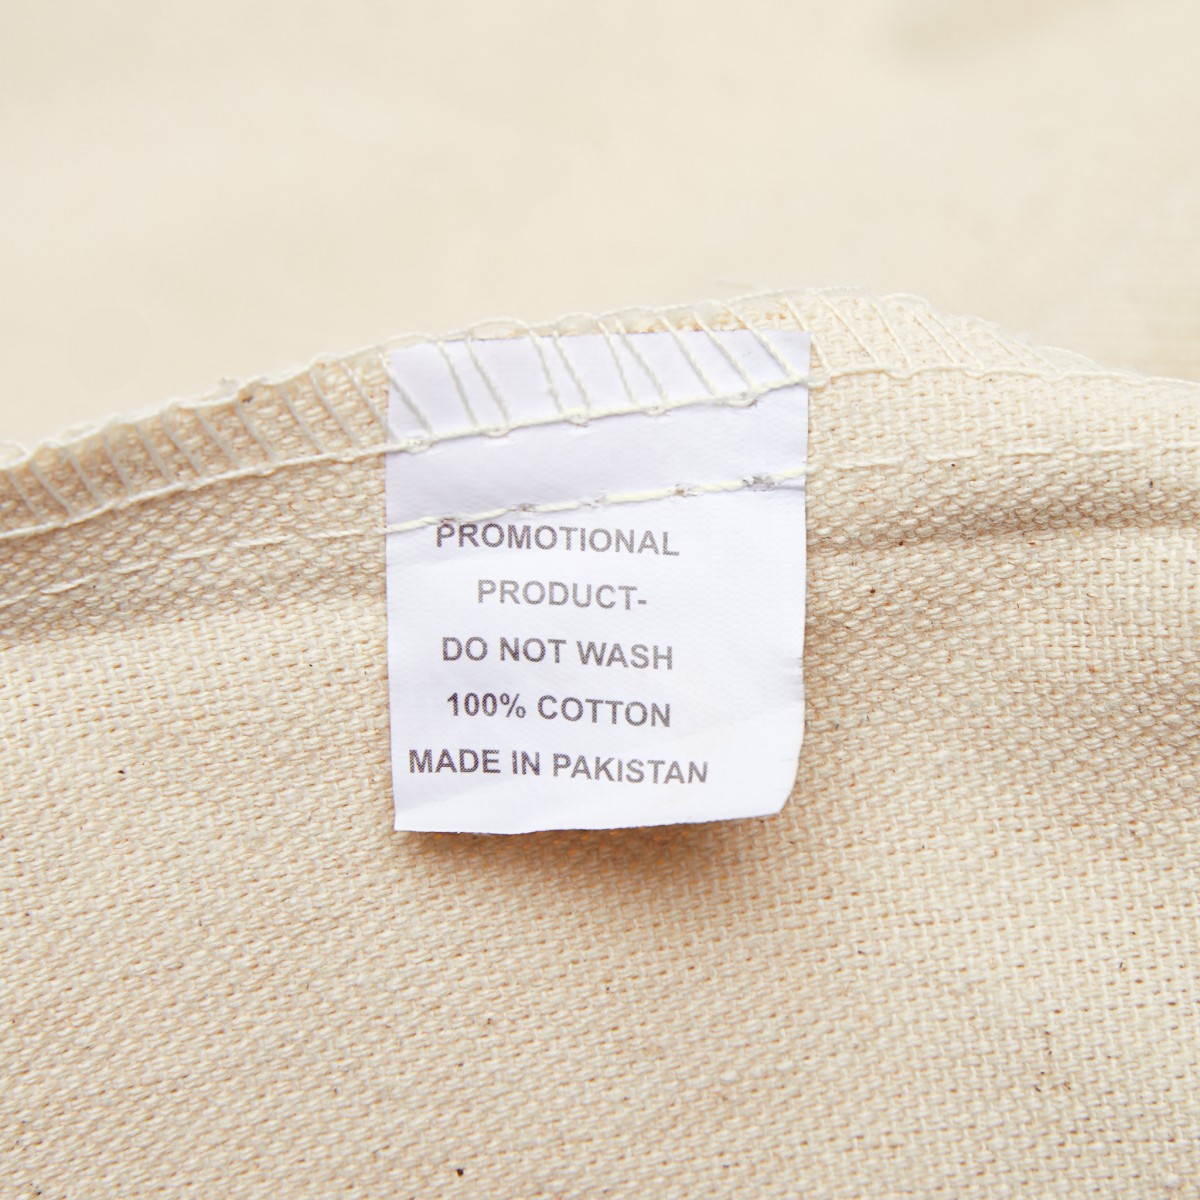 "Ancestral wisdom" Cotton Canvas Tote Bag product thumbnail image